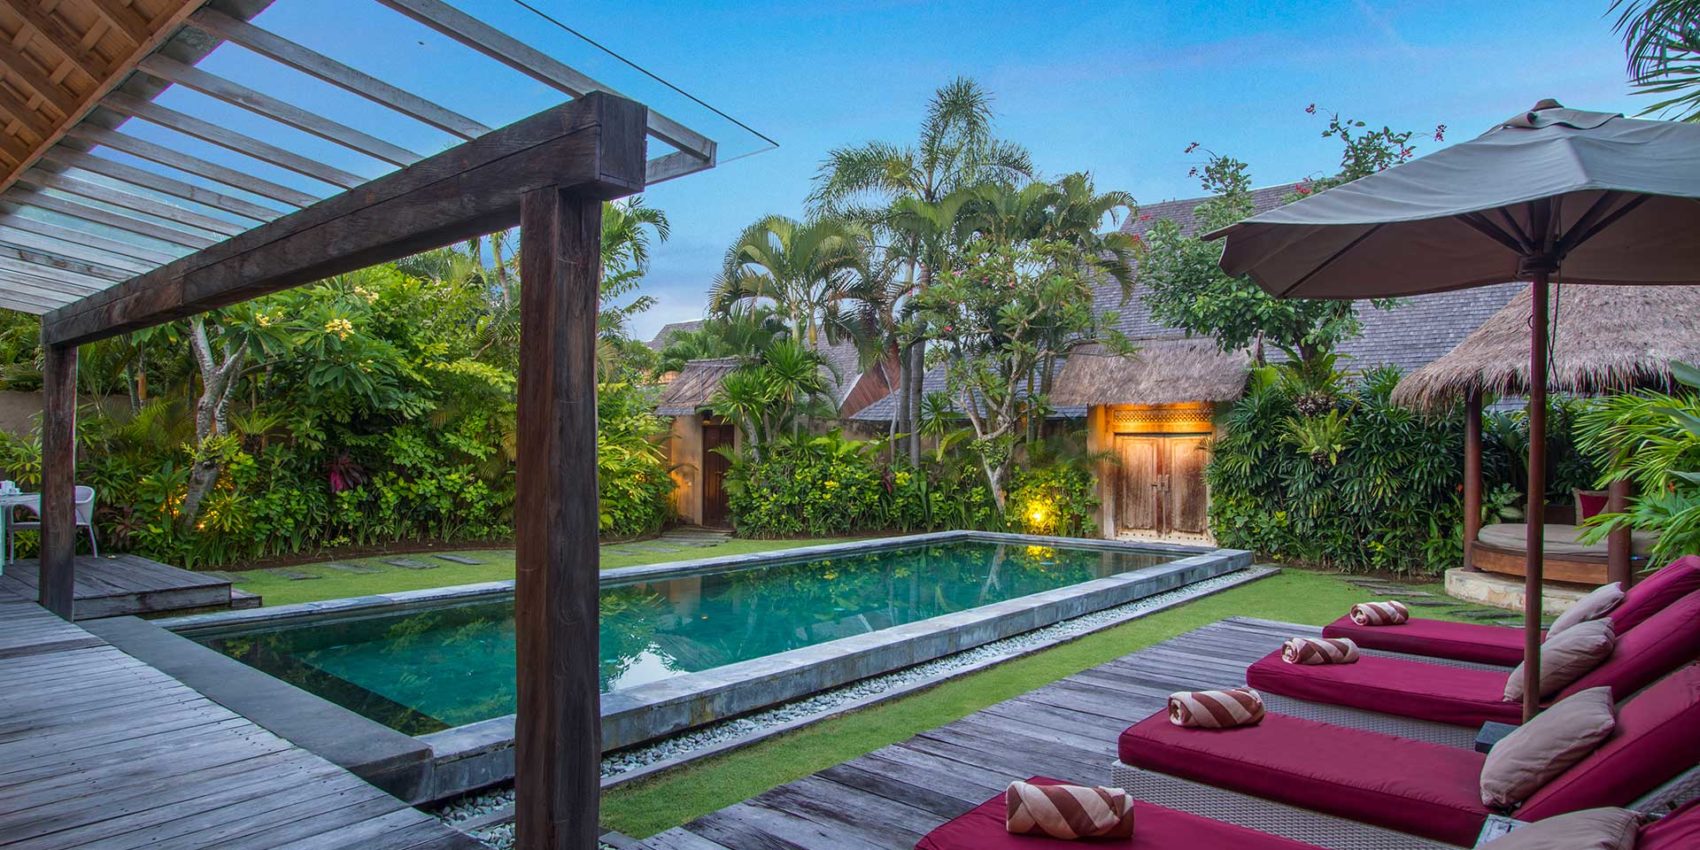 Space Villas Bali Sunbeds